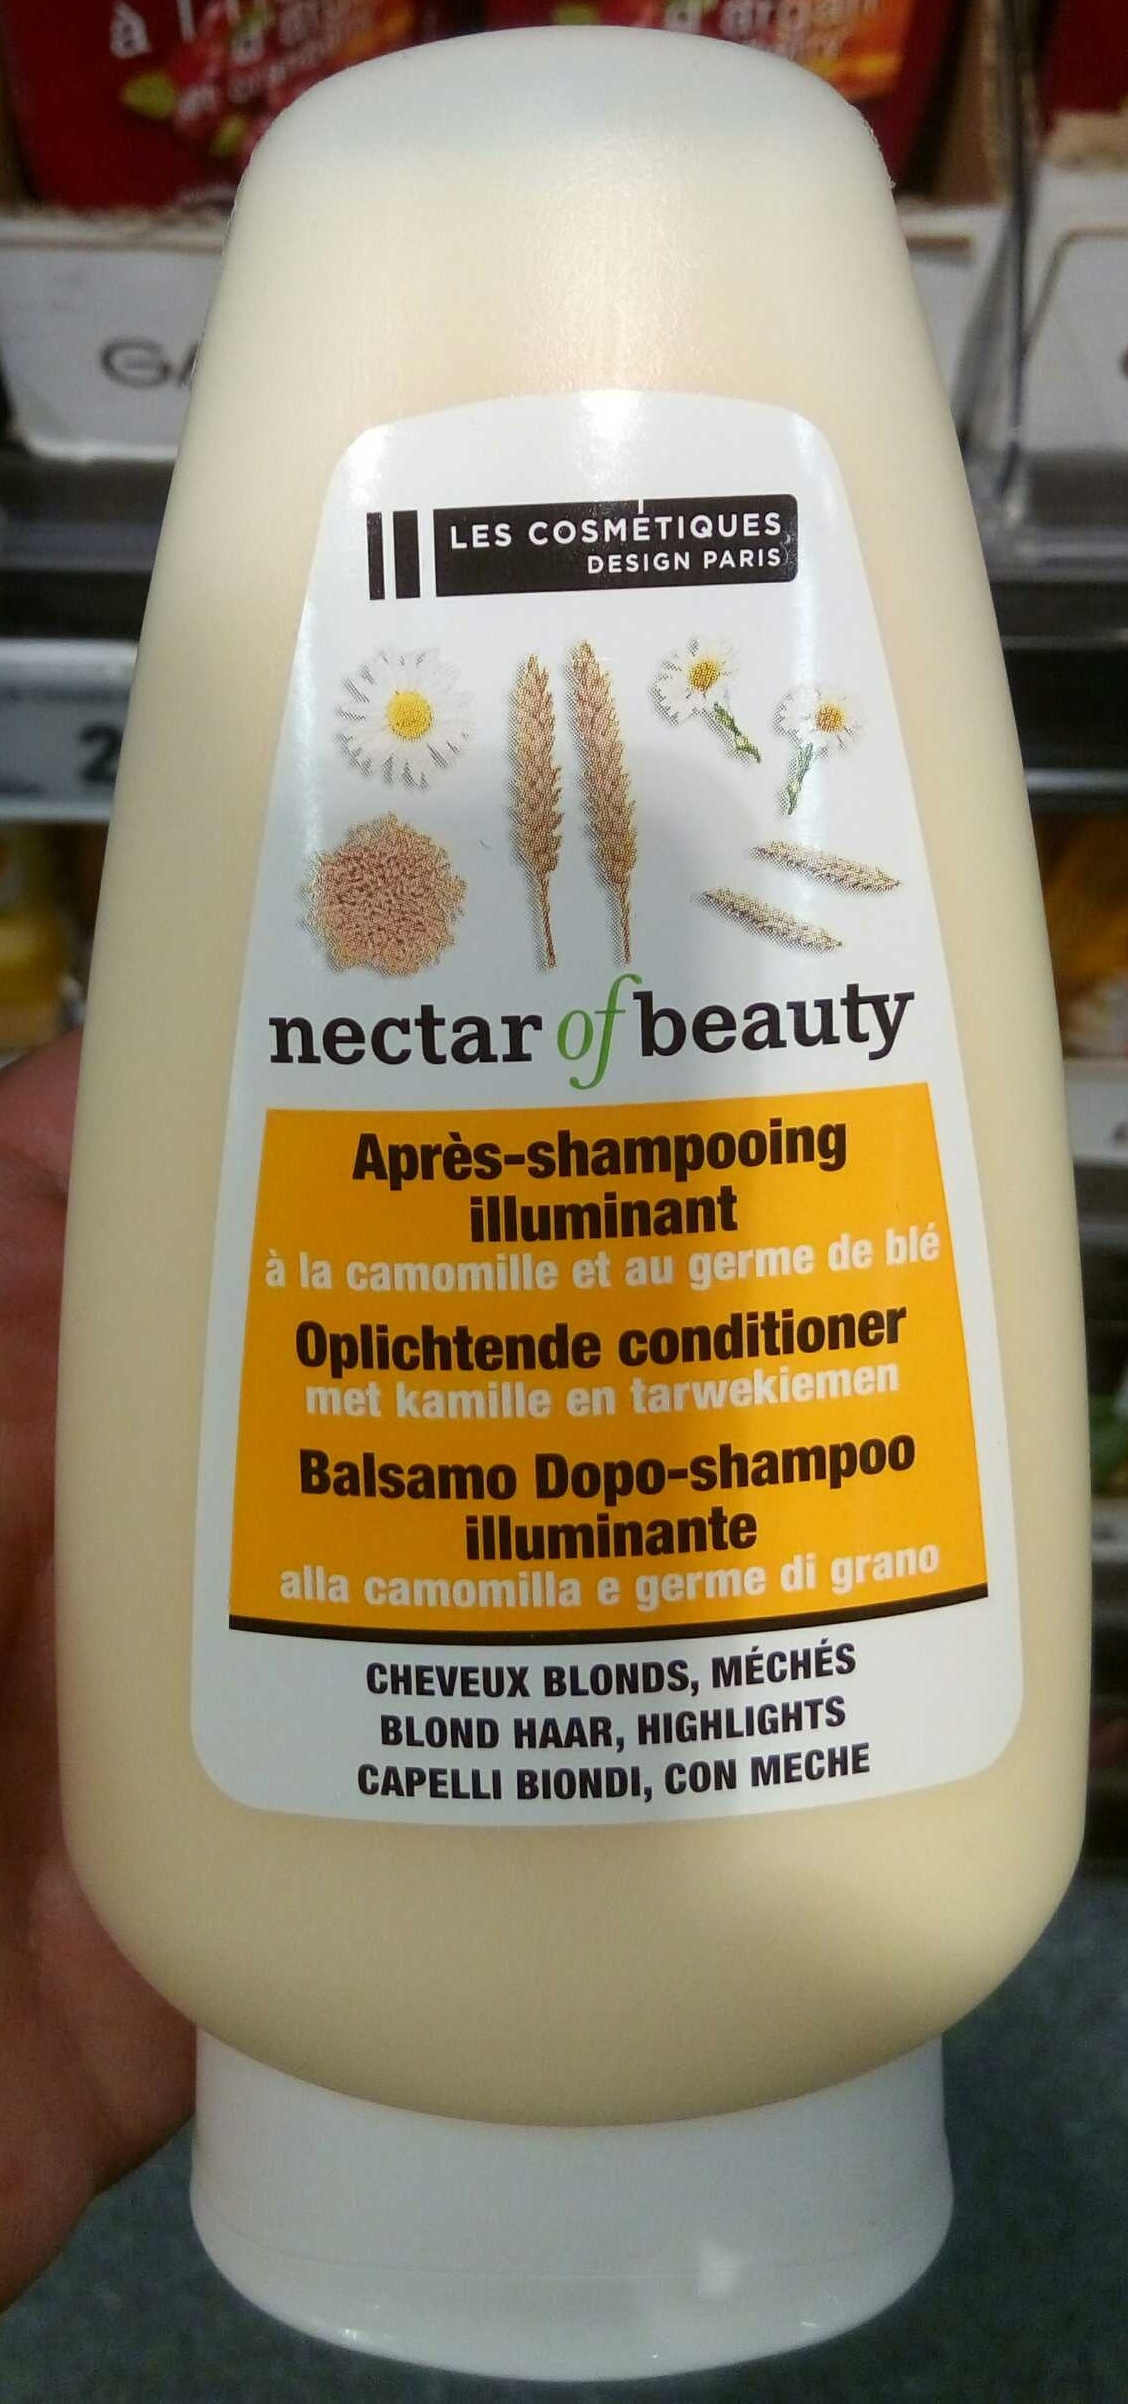 Après-shampooing illuminant - Product - fr